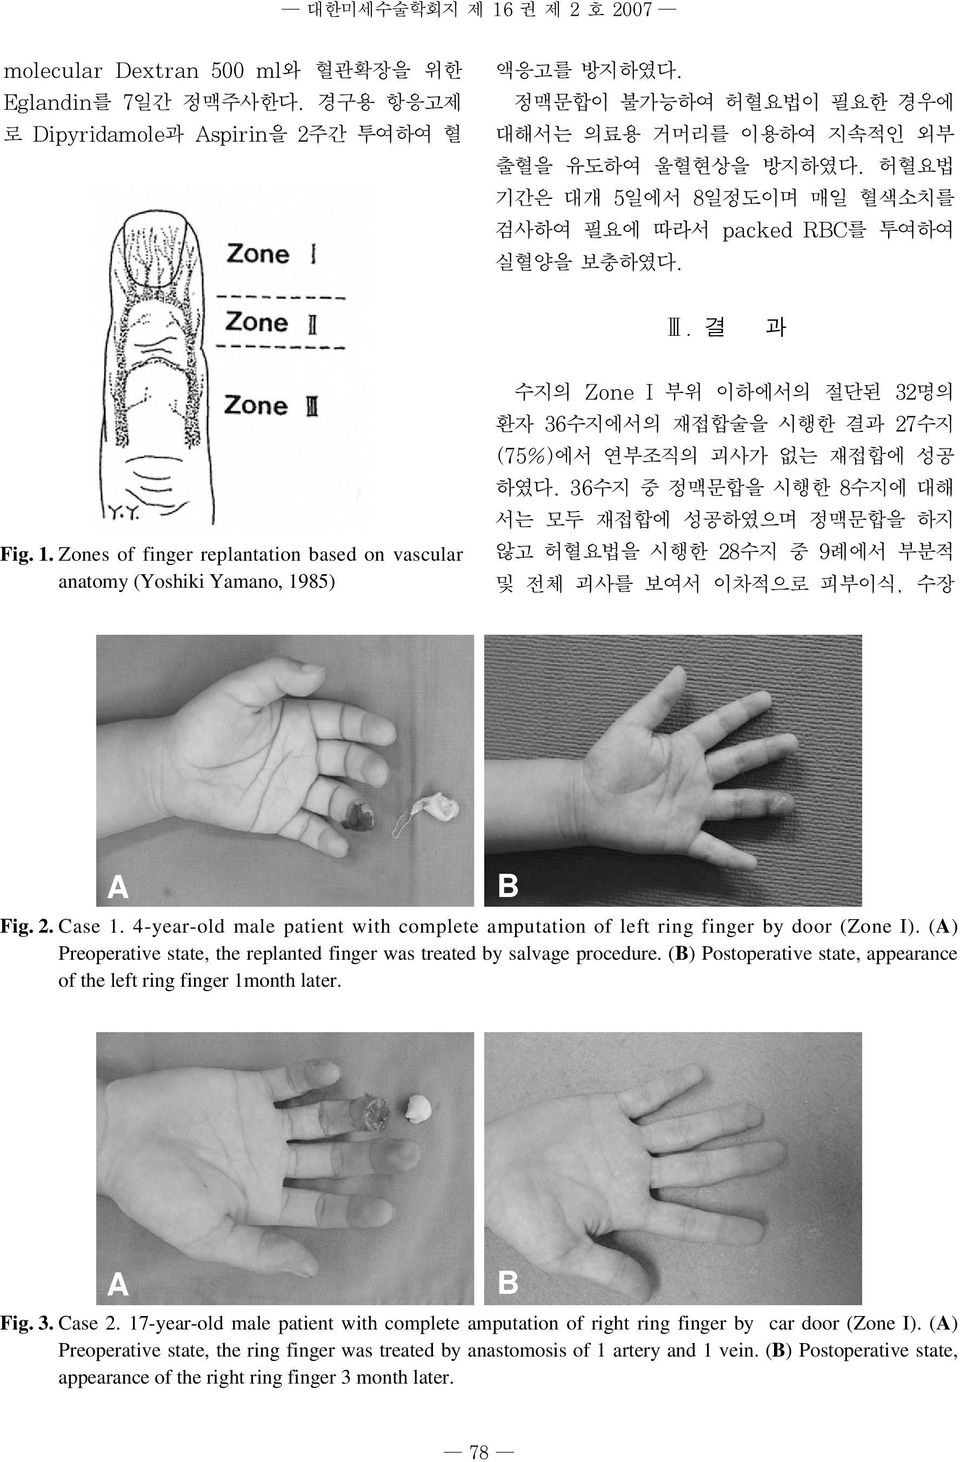 Zones of finger replantation based on vascular anatomy (Yoshiki Yamano, 1985) 수지의 Zone I 부위 이하에서의 절단된 32명의 환자 36수지에서의 재접합술을 시행한 결과 27수지 (75%)에서 연부조직의 괴사가 없는 재접합에 성공 하였다.